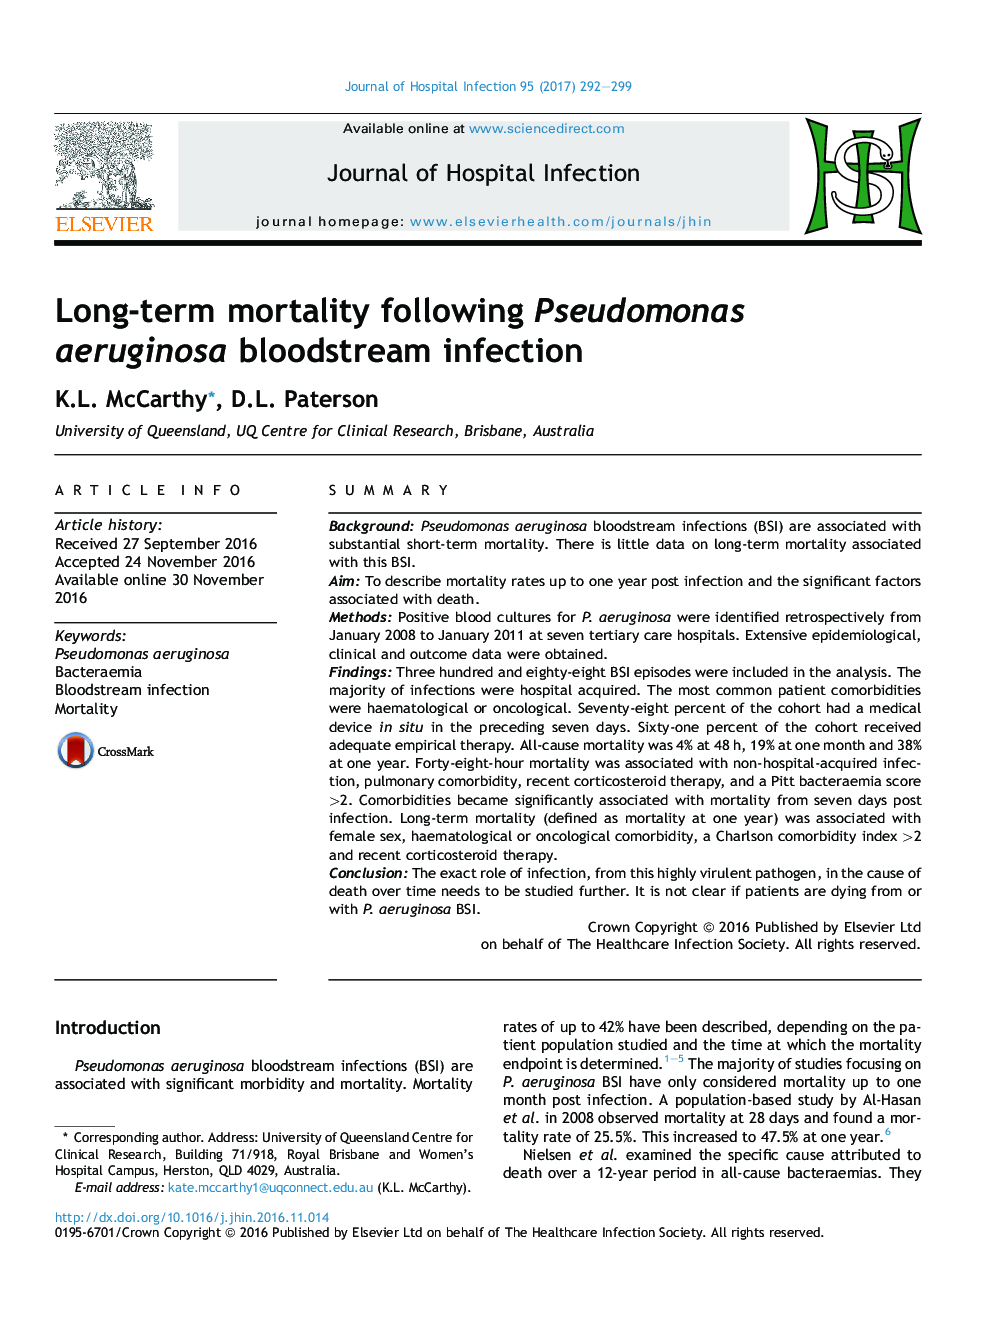 Long-term mortality following Pseudomonas aeruginosa bloodstream infection